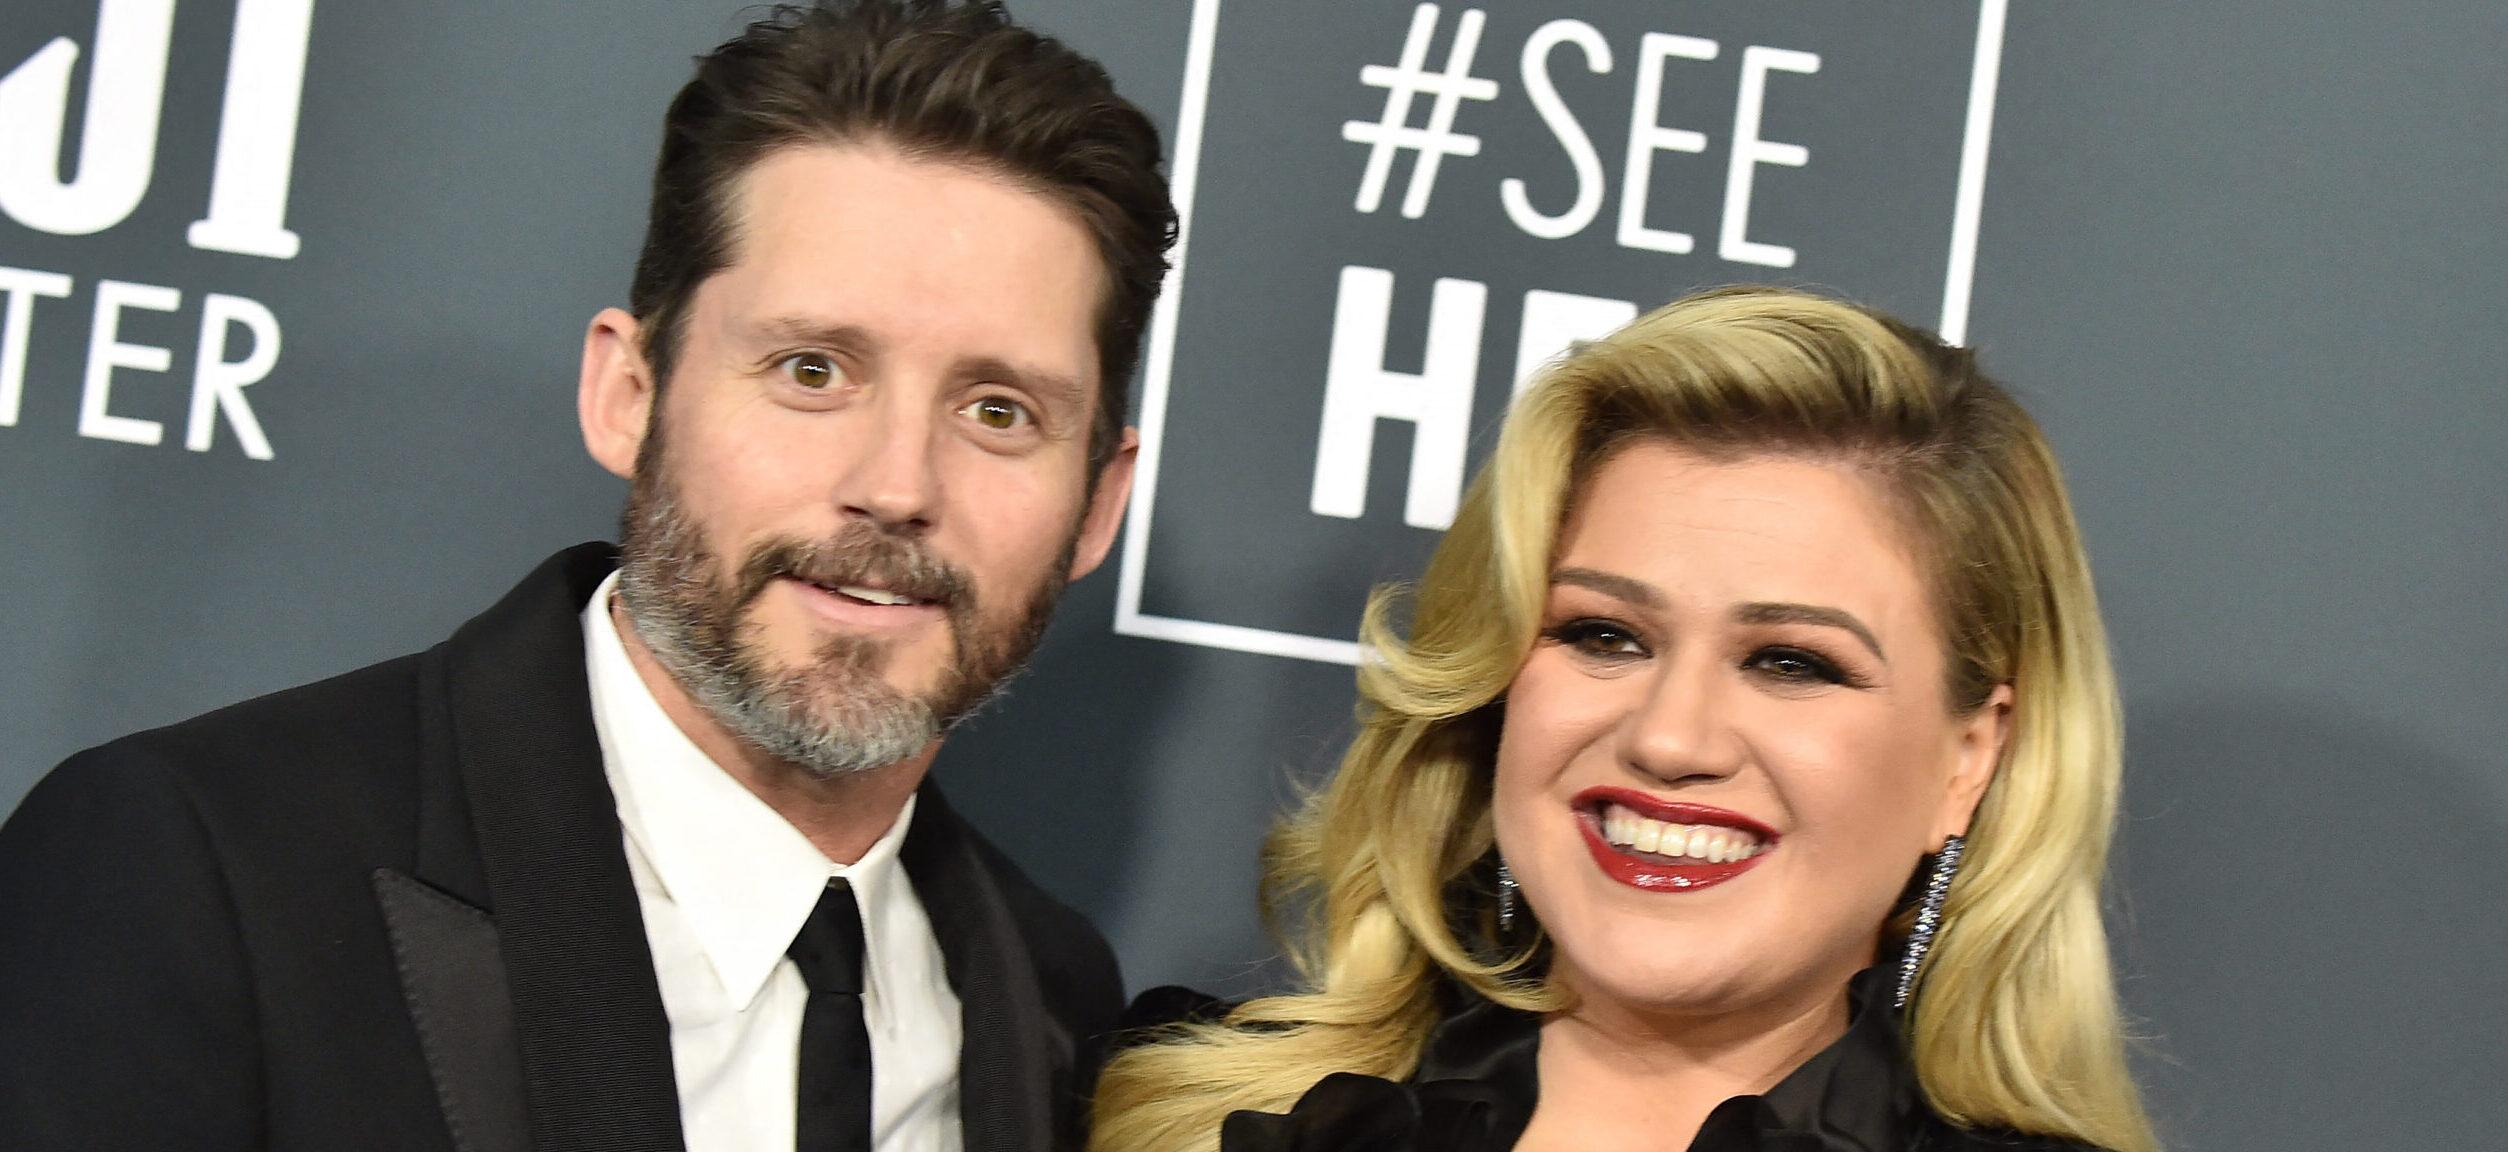 Kelly Clarkson’s Ex-Husband Wants Last Month’s Lawsuit Dismissed